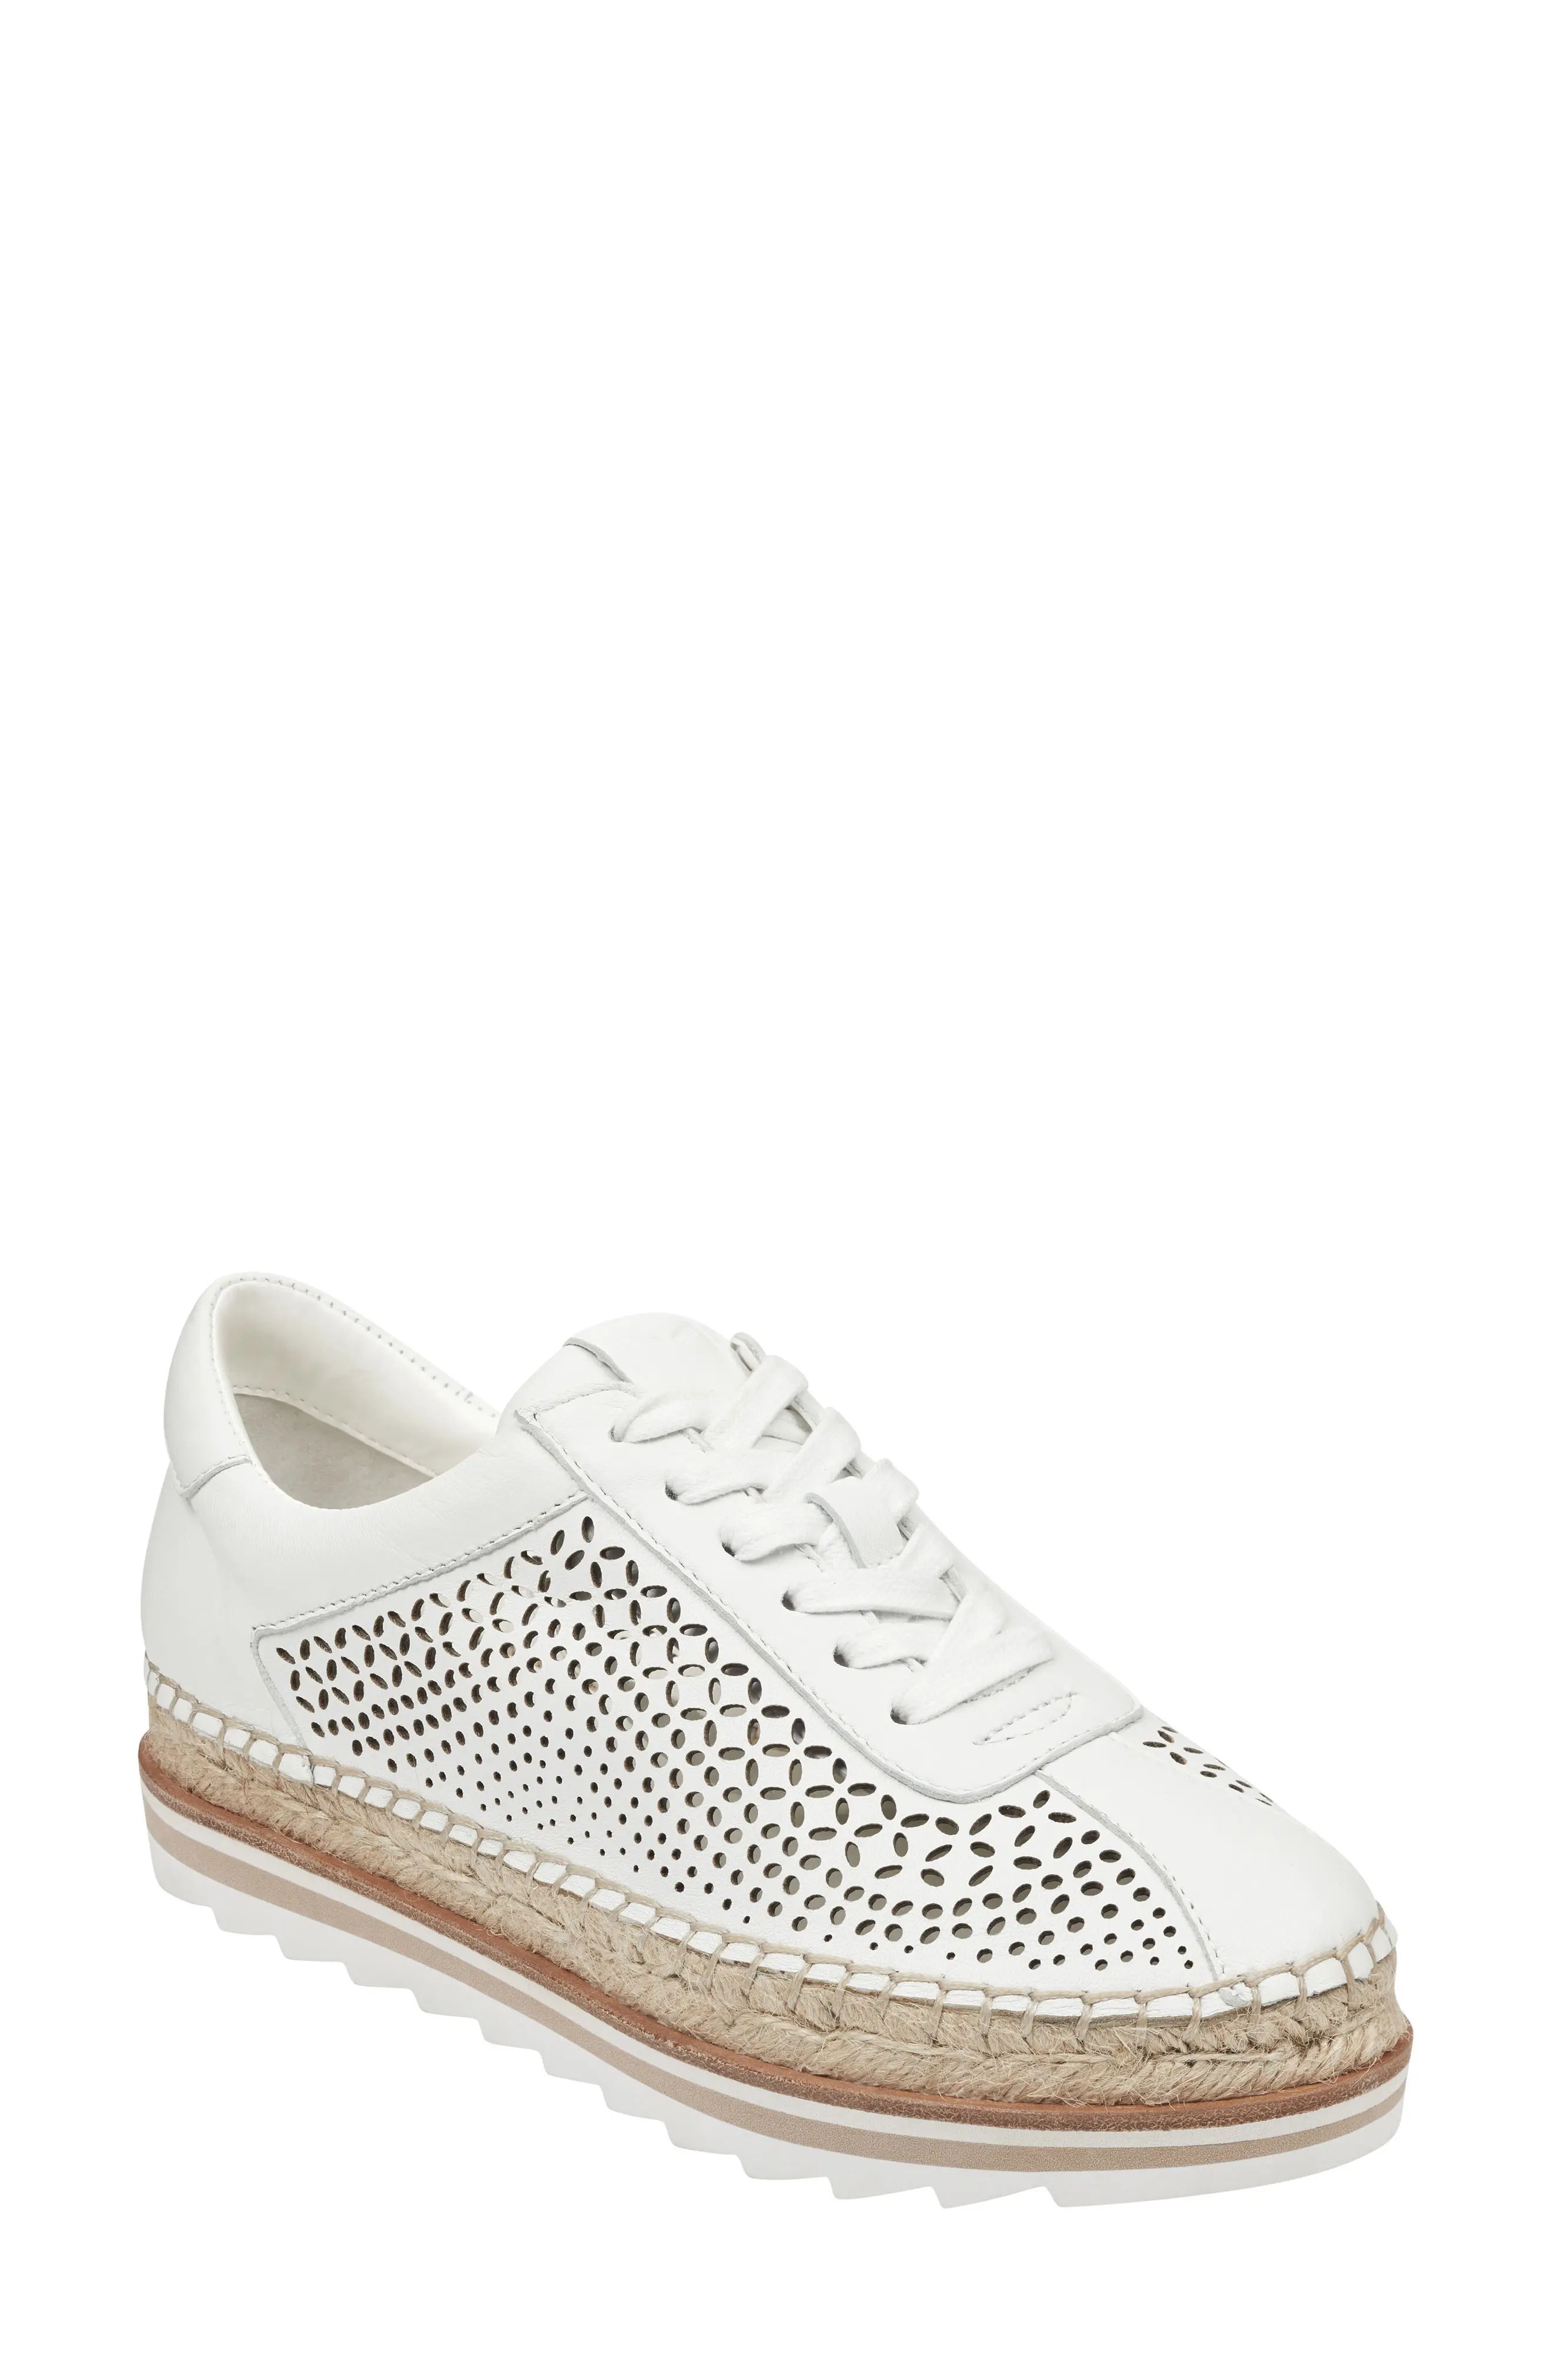 Women's Marc Fisher Ltd Walden Espadrille Sneaker, Size 5 M - White | Nordstrom